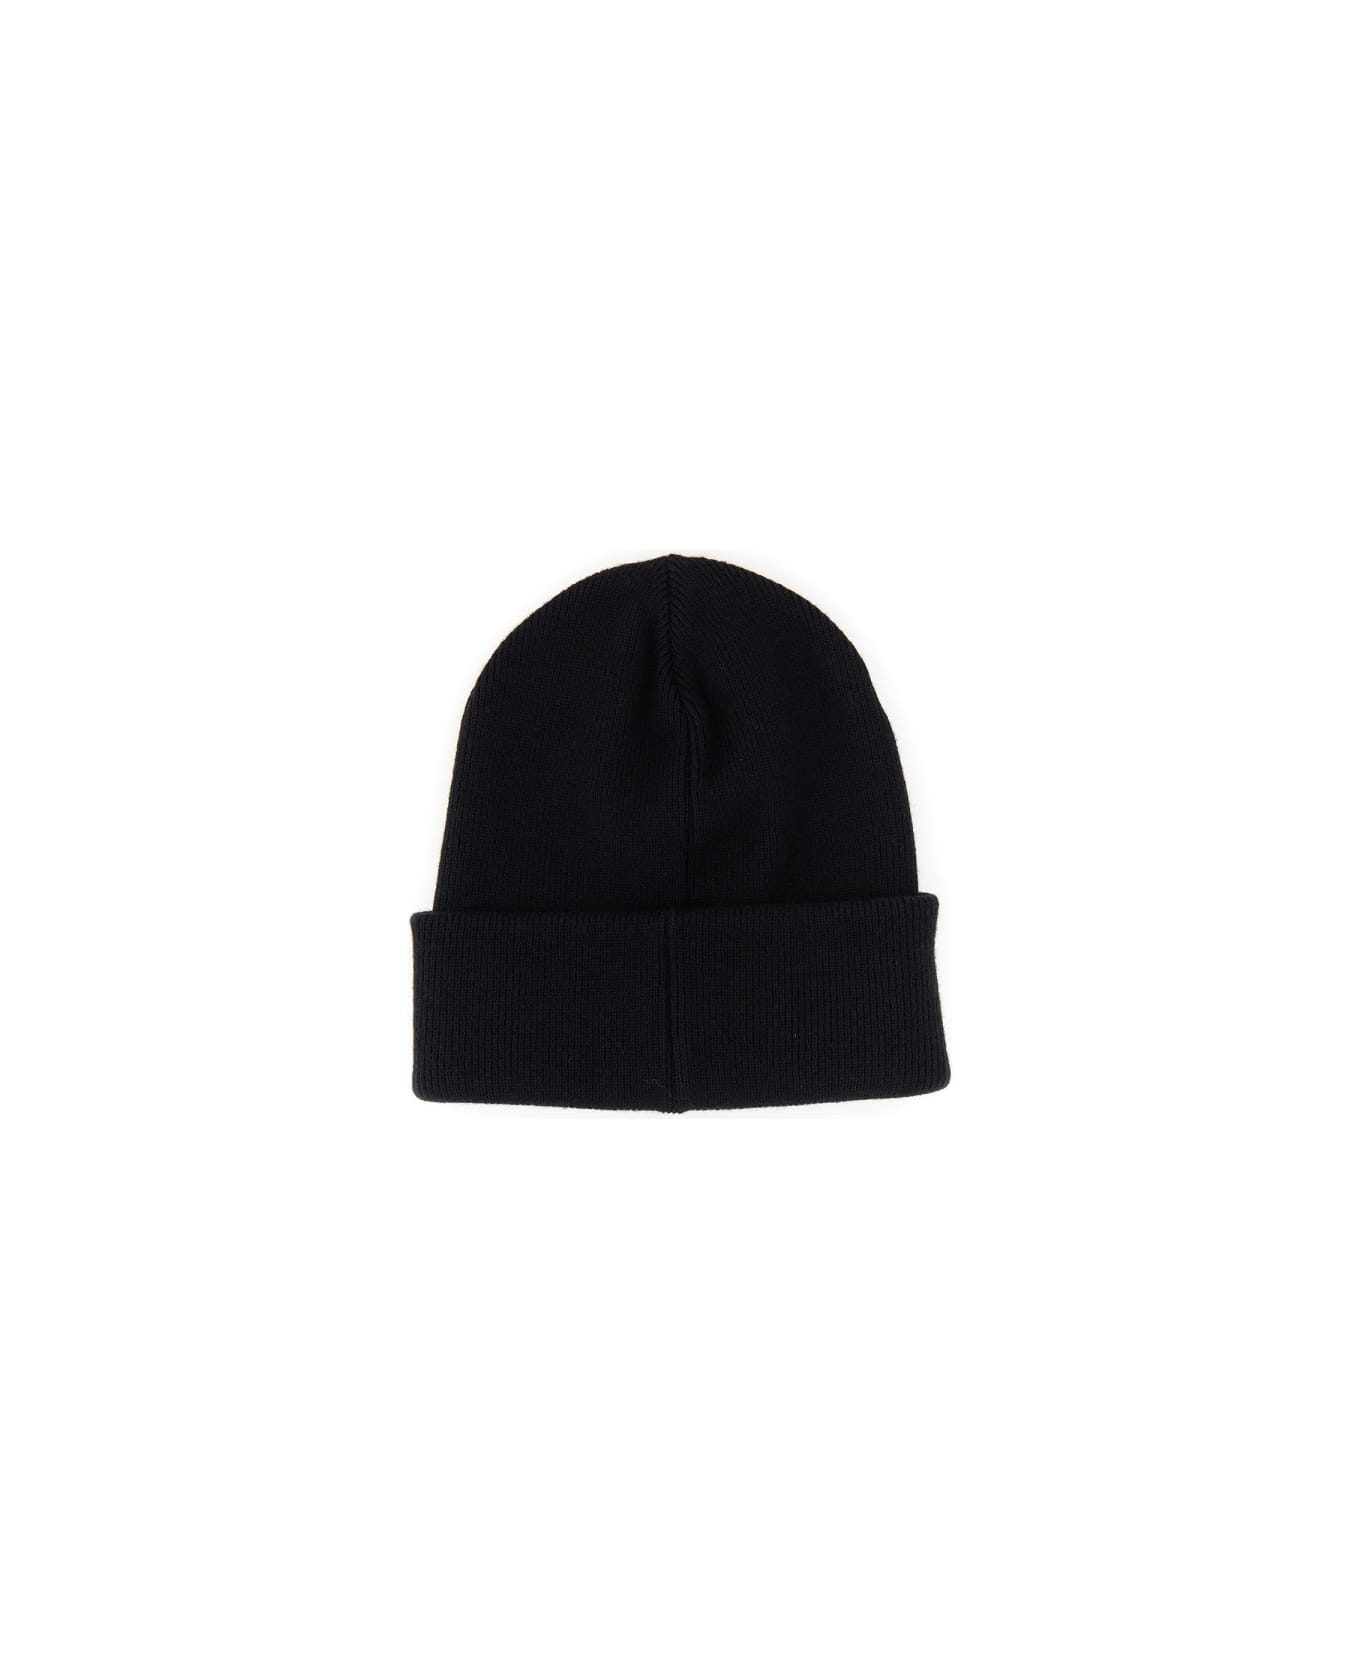 Dsquared2 Knit Hat - BLACK 帽子